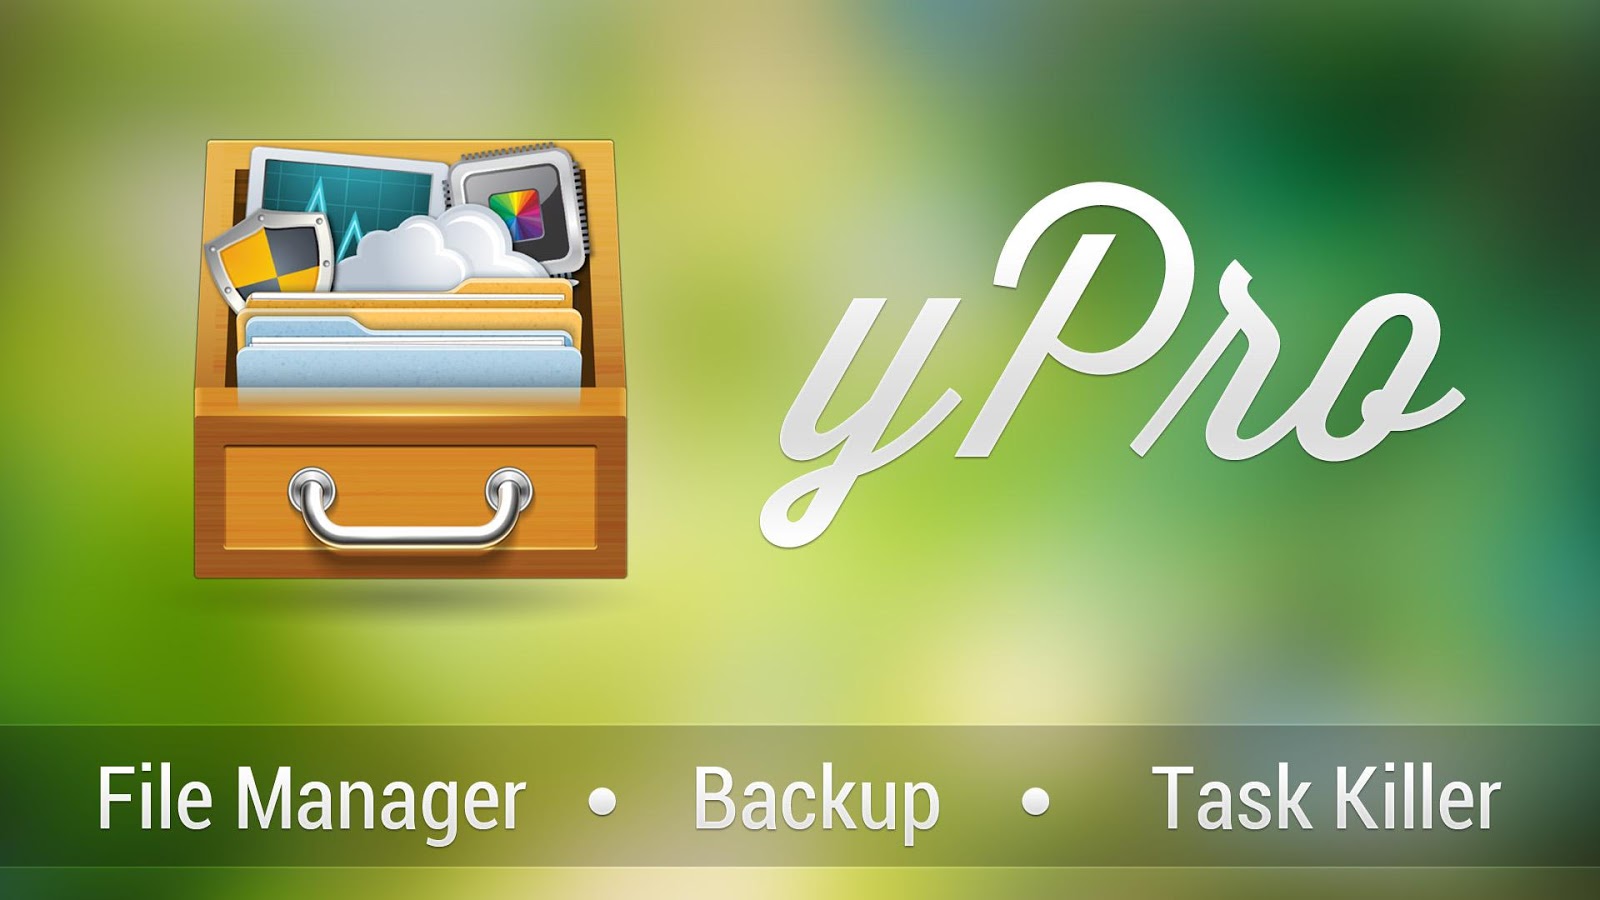 File Explorer & Backup - yPro - screenshot